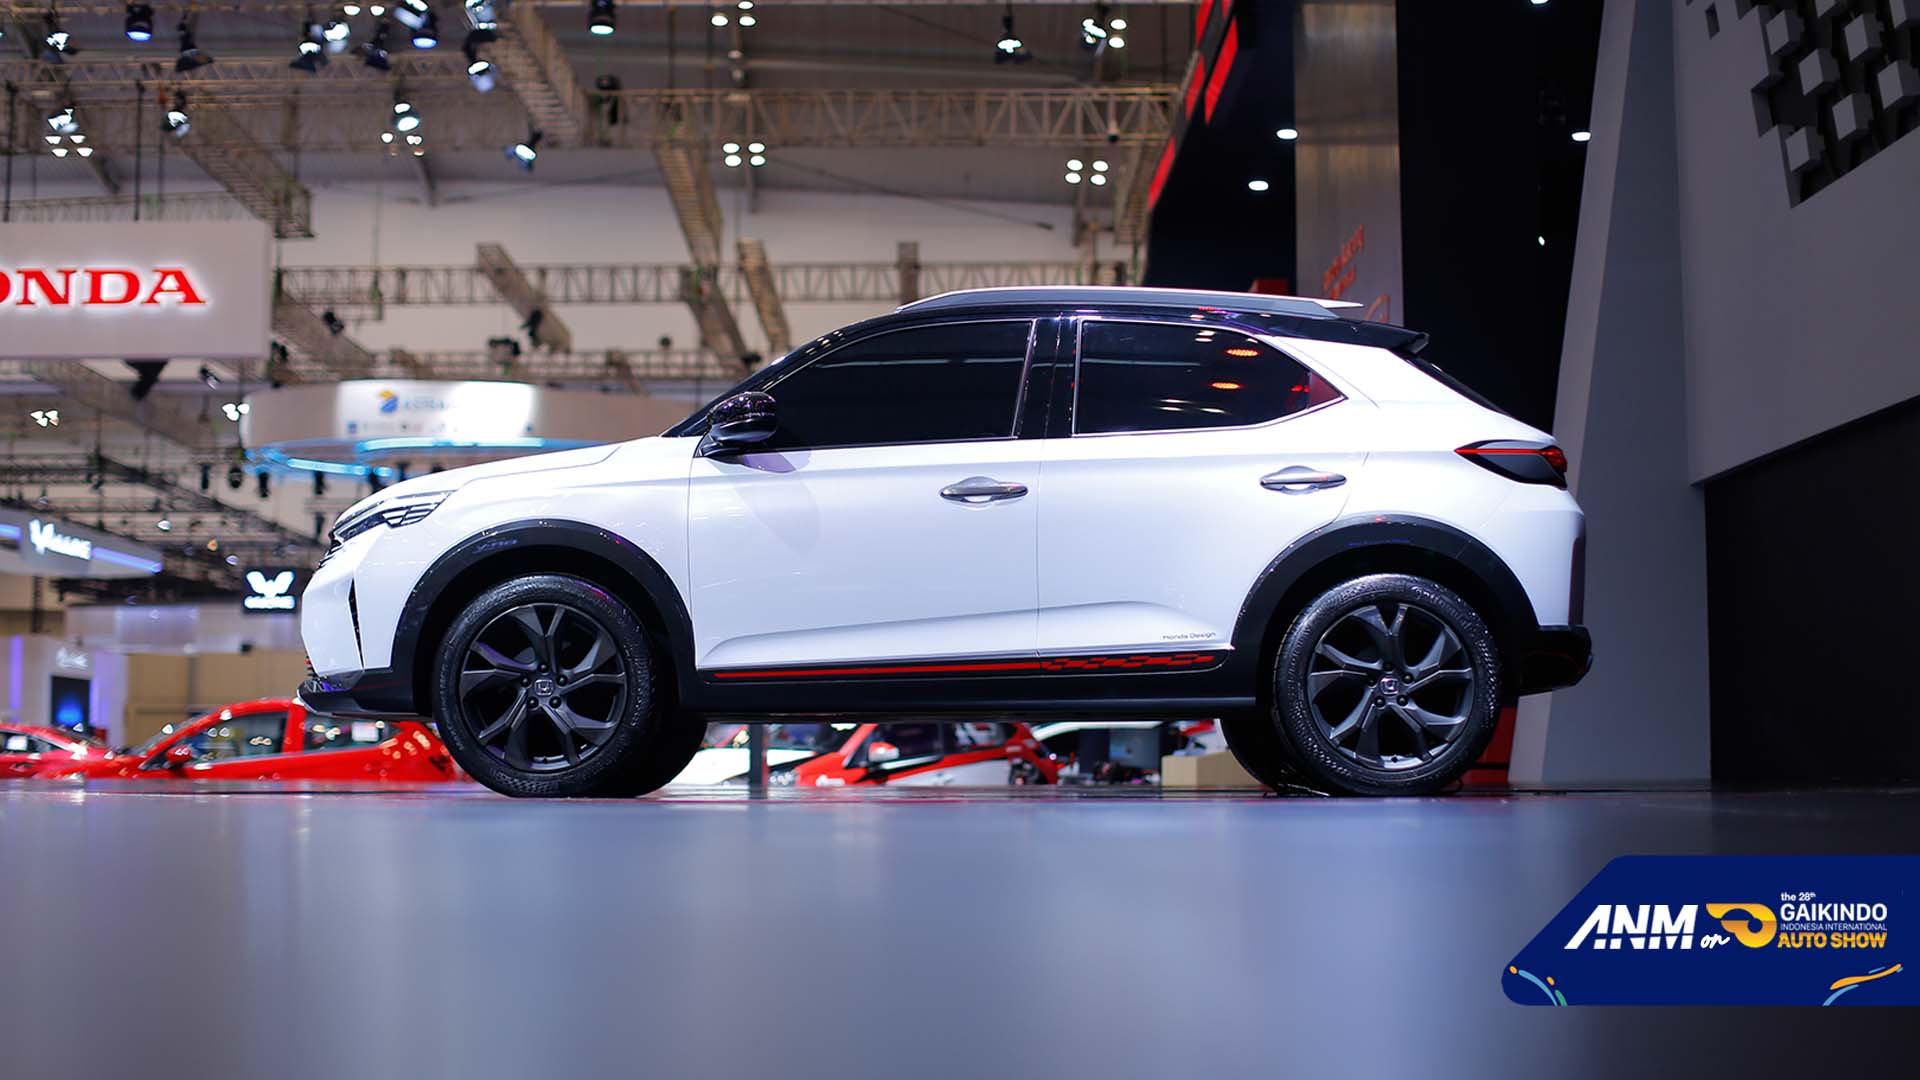 Berita, Honda SUV RS Concept samping: GIIAS 2021 : Foto Lengkap Honda SUV RS Concept, Emang Ganteng!